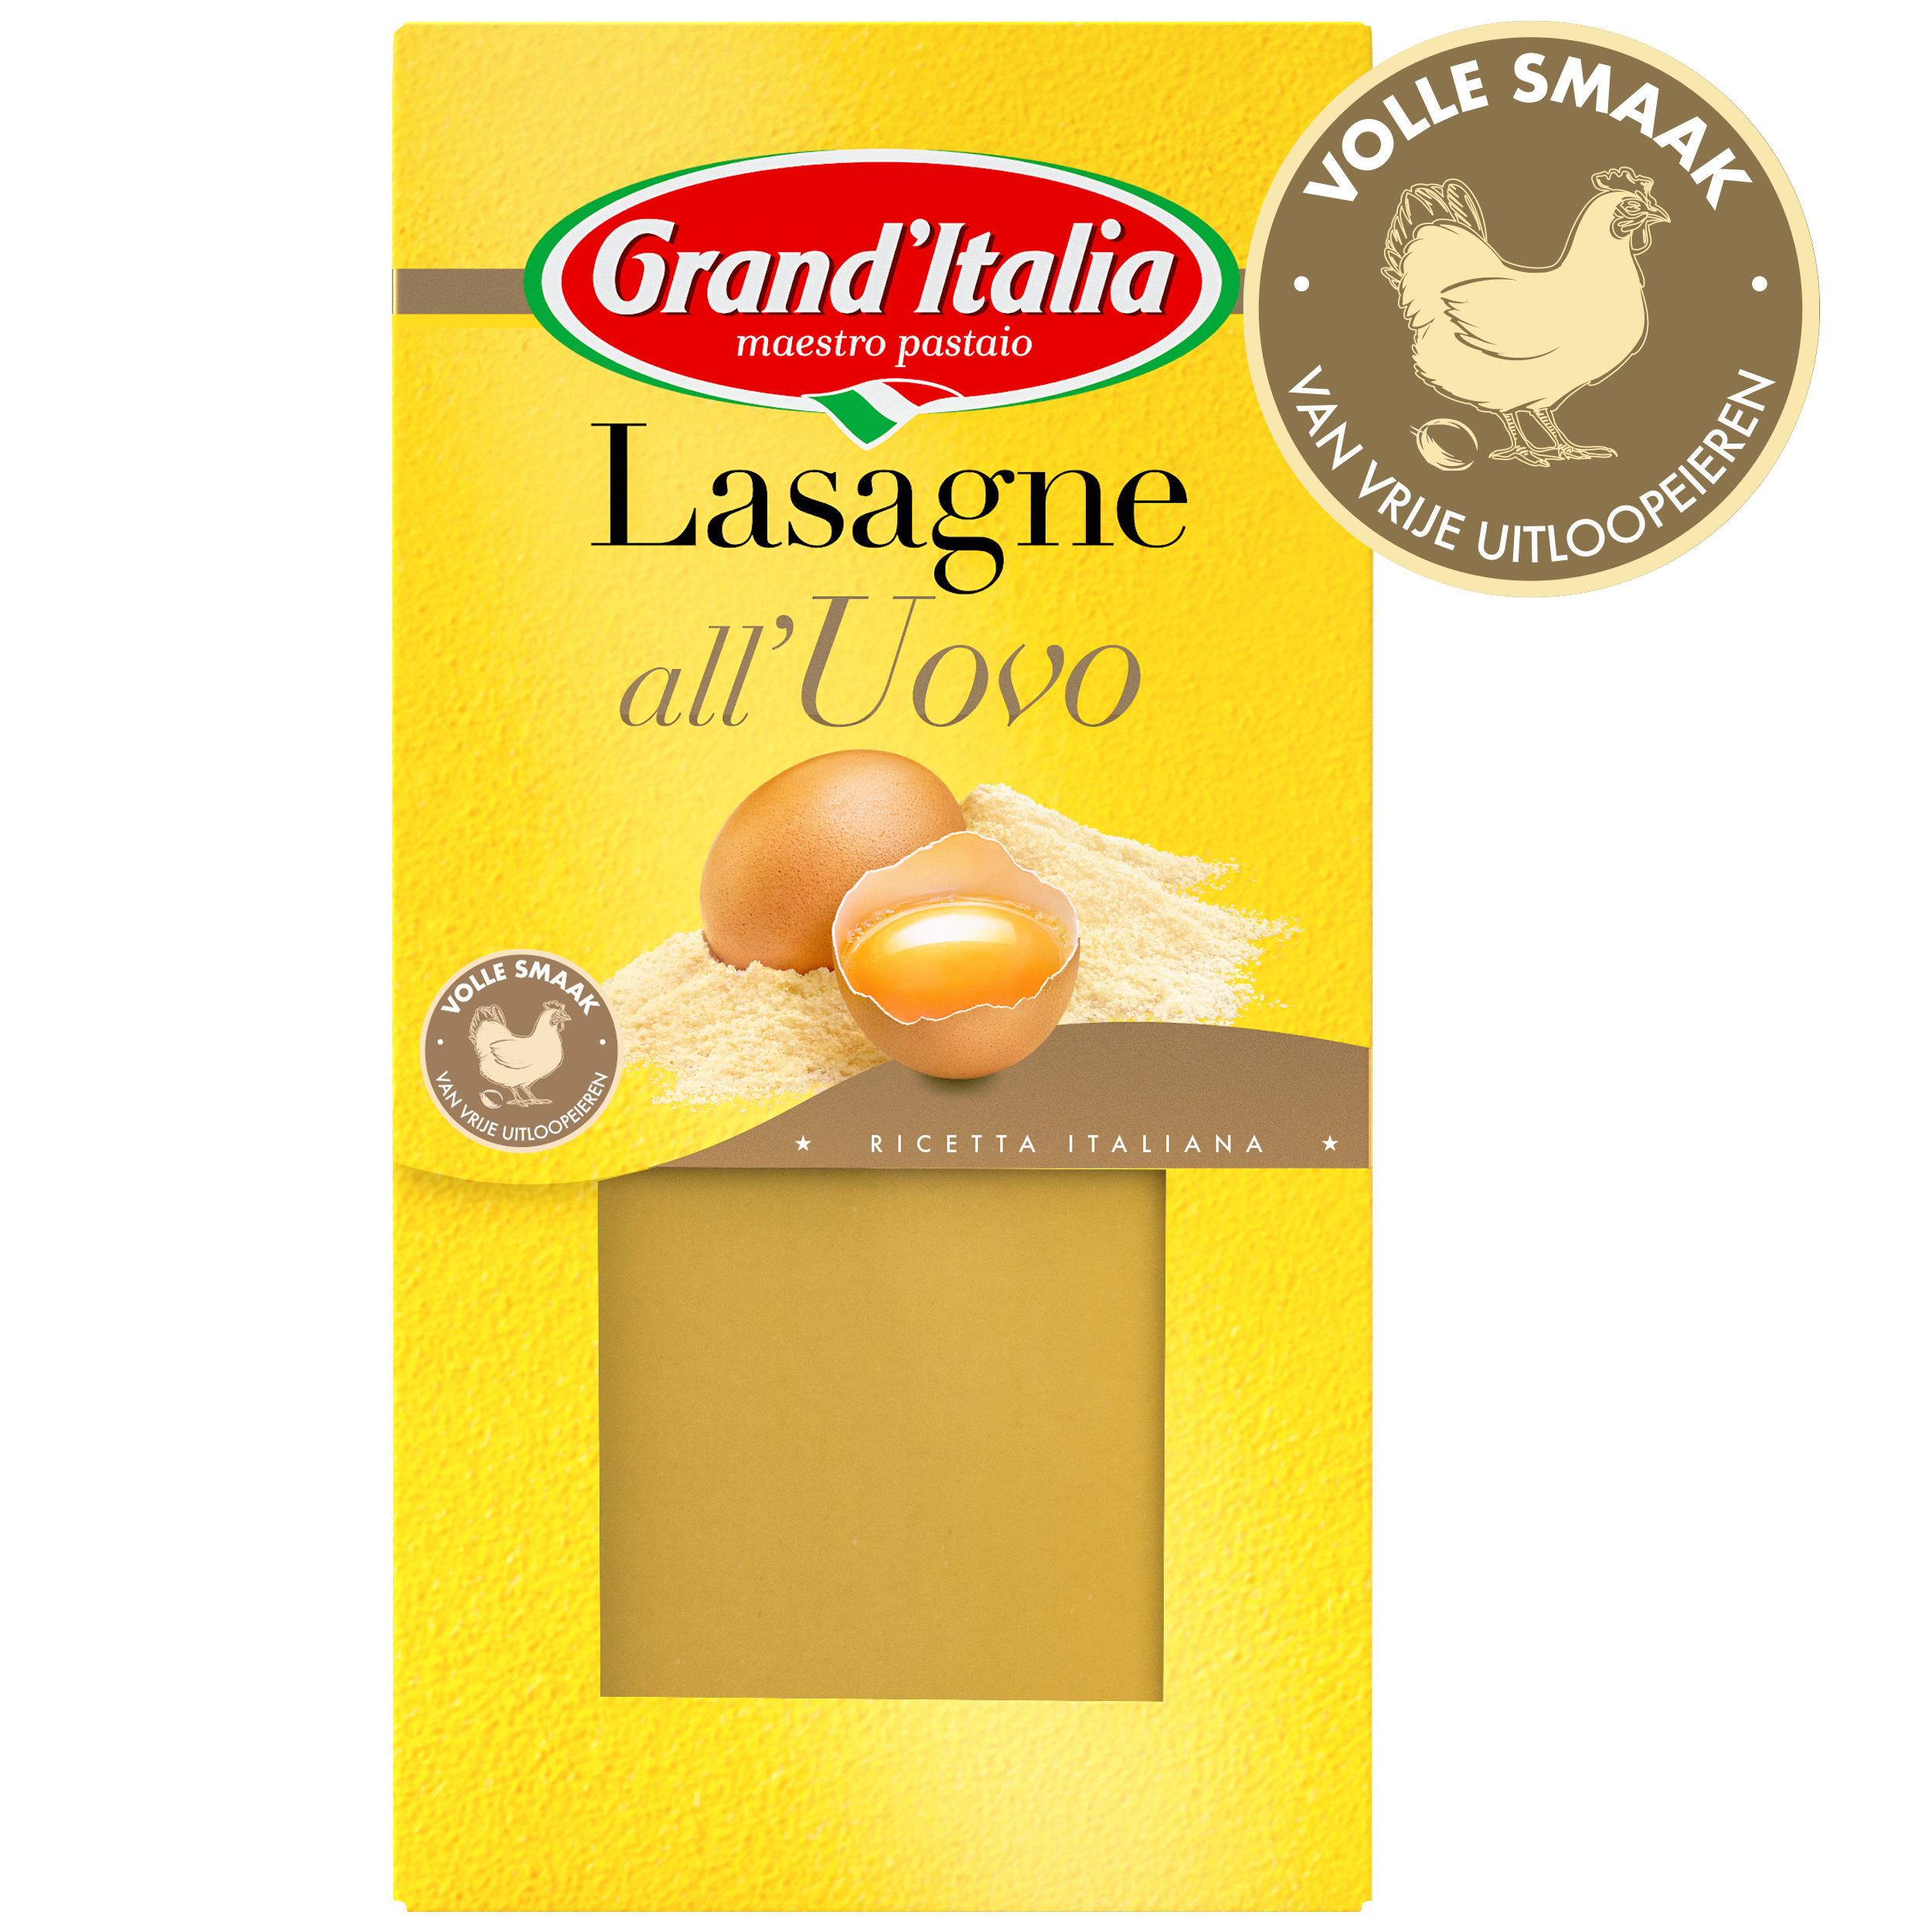 Pasta Lasagne all'Uovo 250g claim Grand'Italia